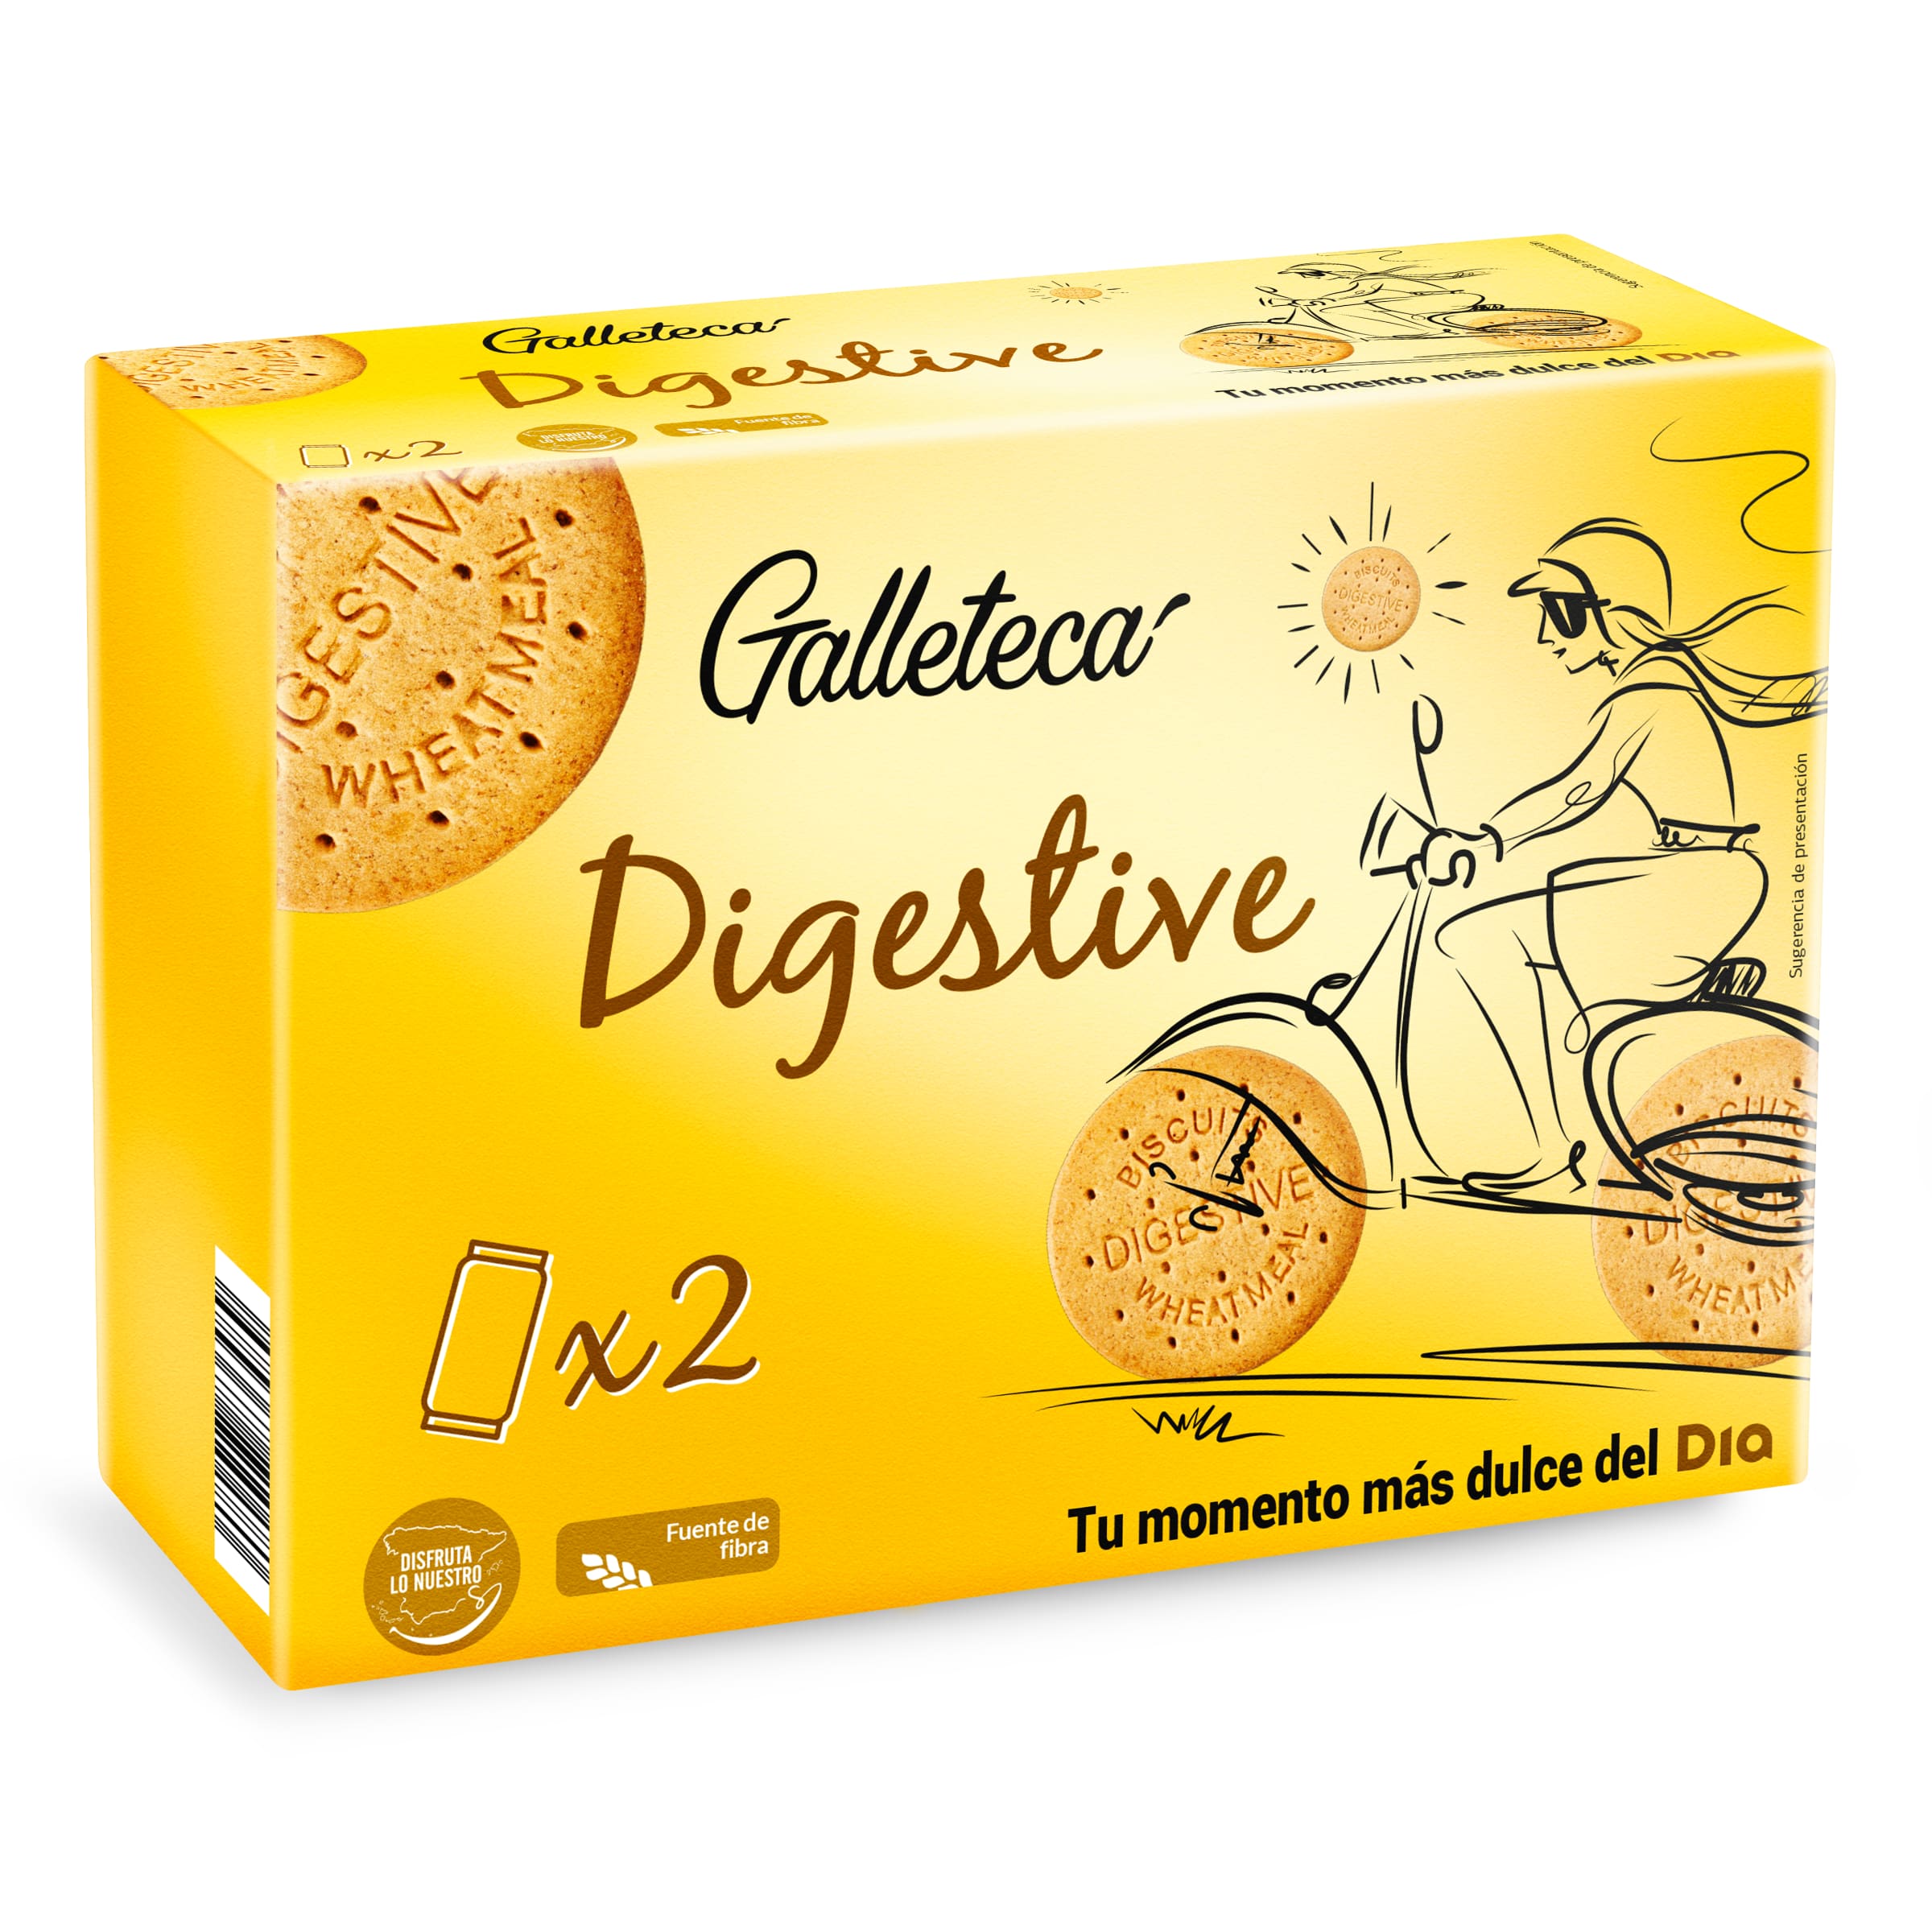 Galletas digestive Galleteca caja 800 g - Supermercados DIA